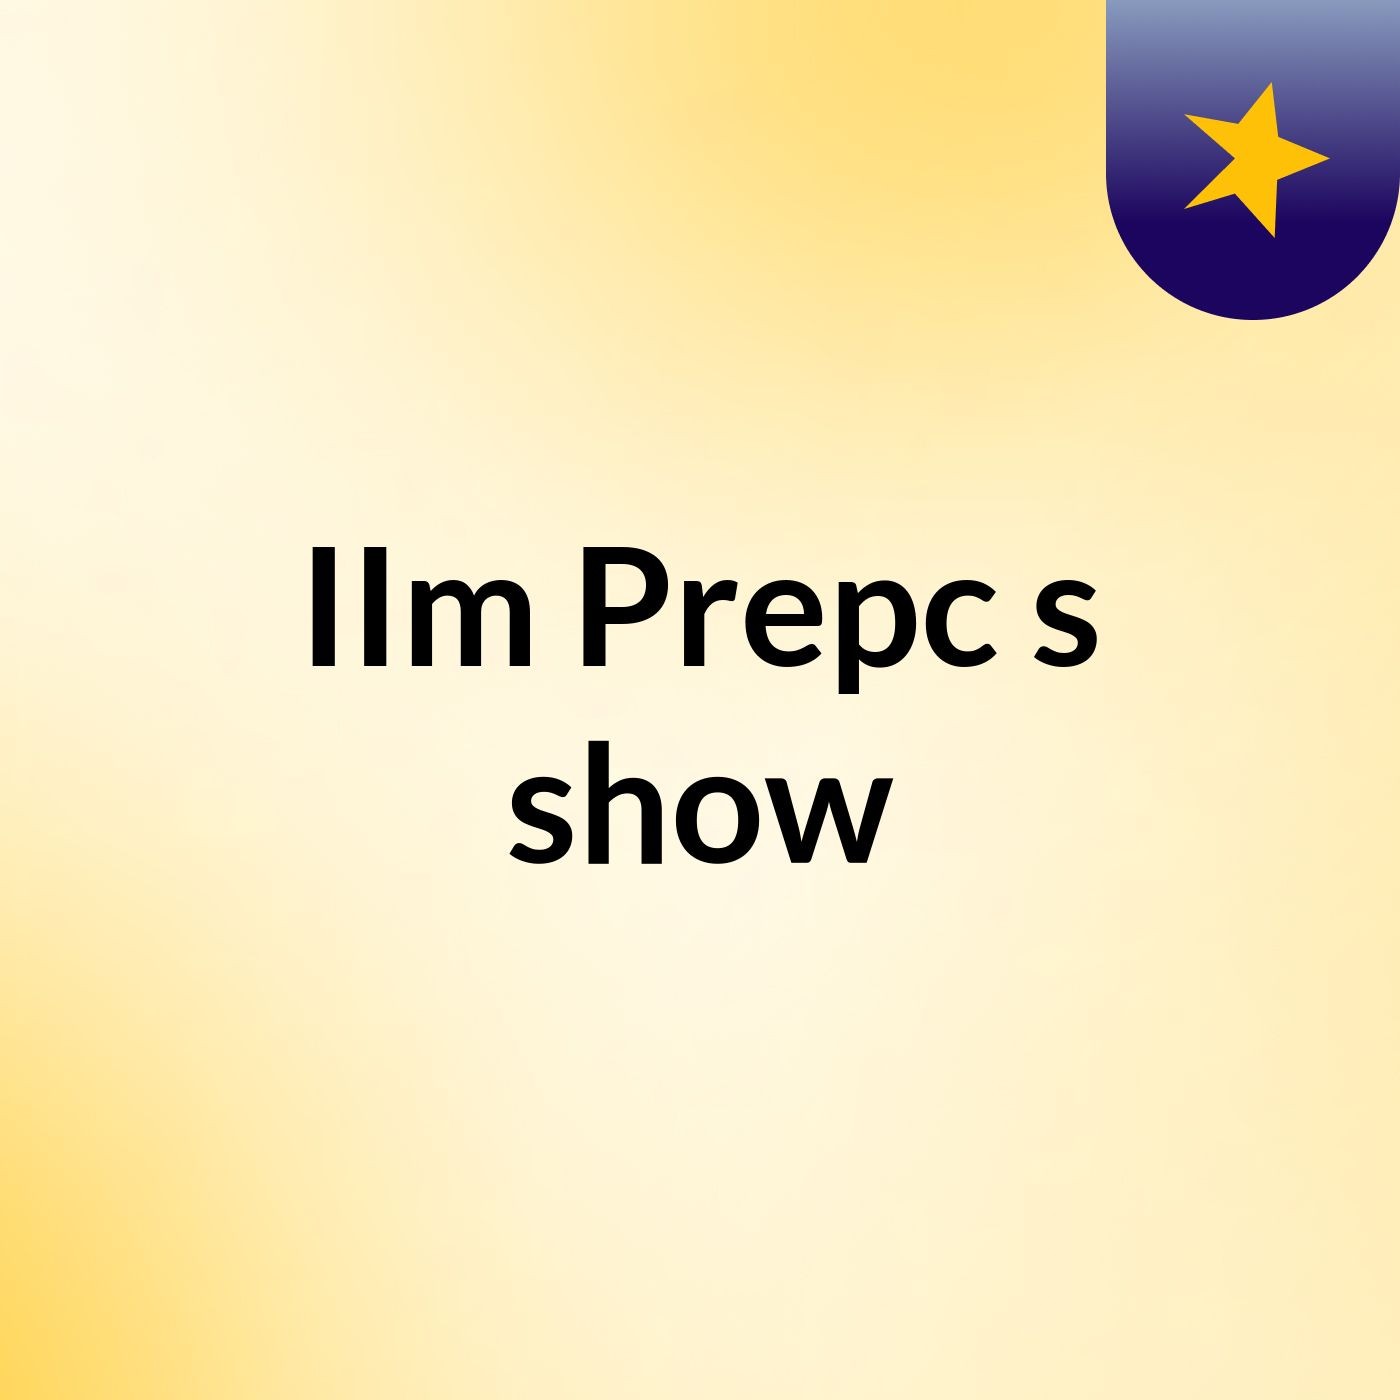 IIm Prepc's show